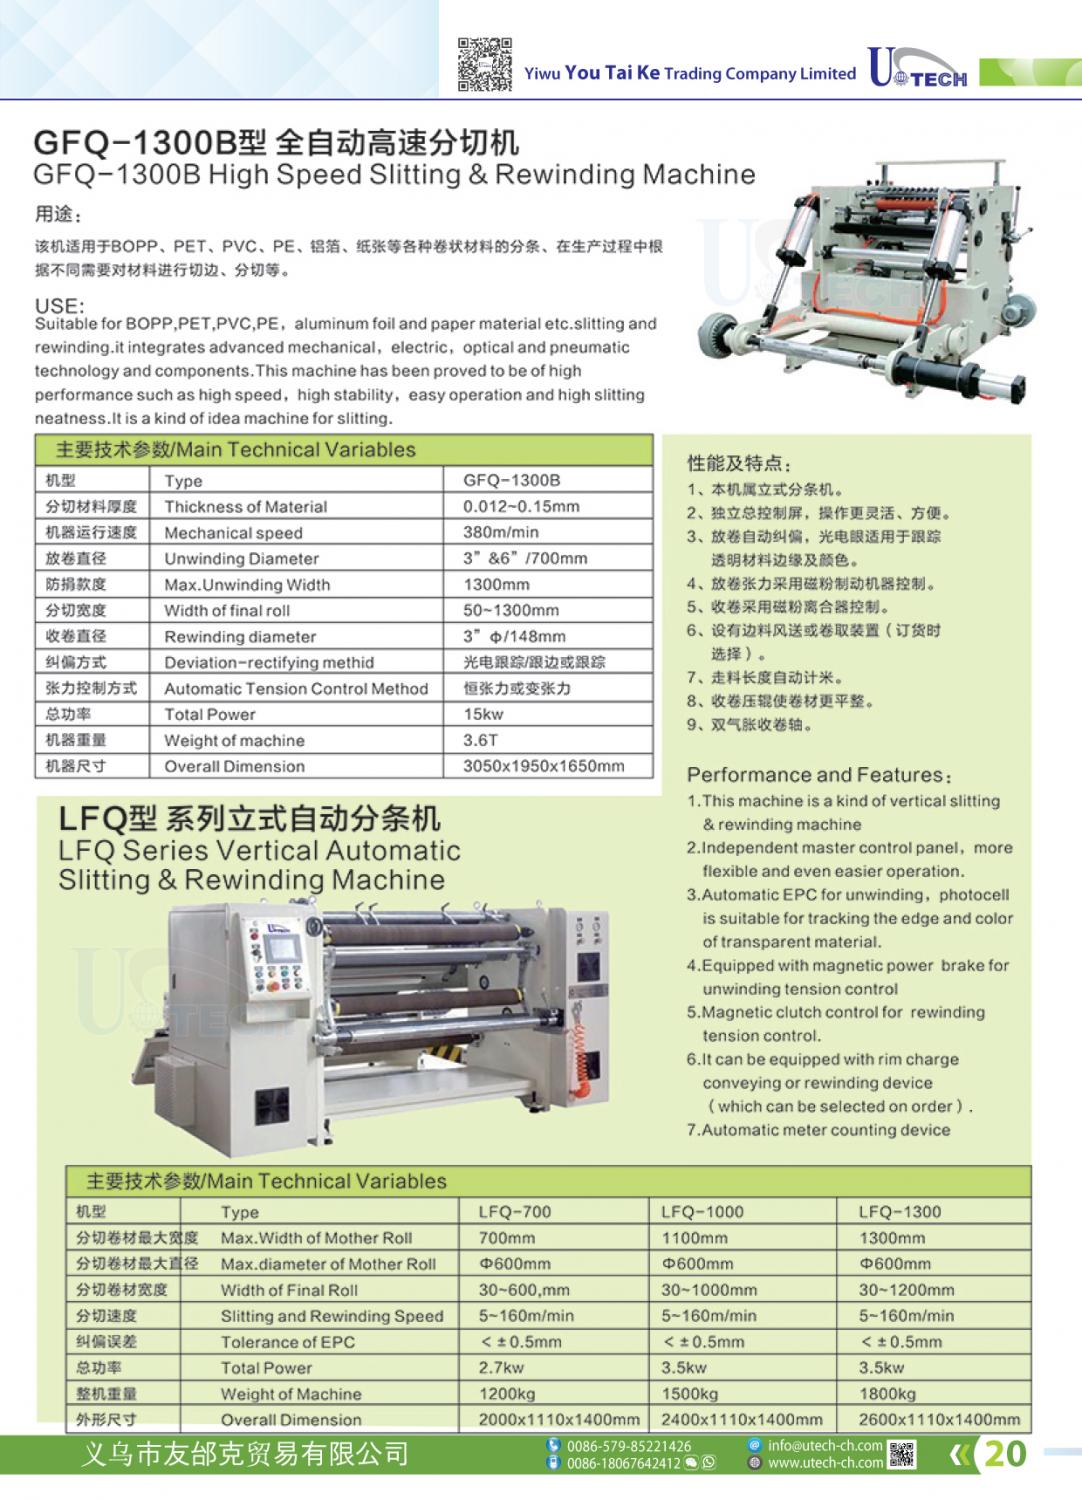 GFQ-1300B High Speed Slitting & Rewinding Machine 